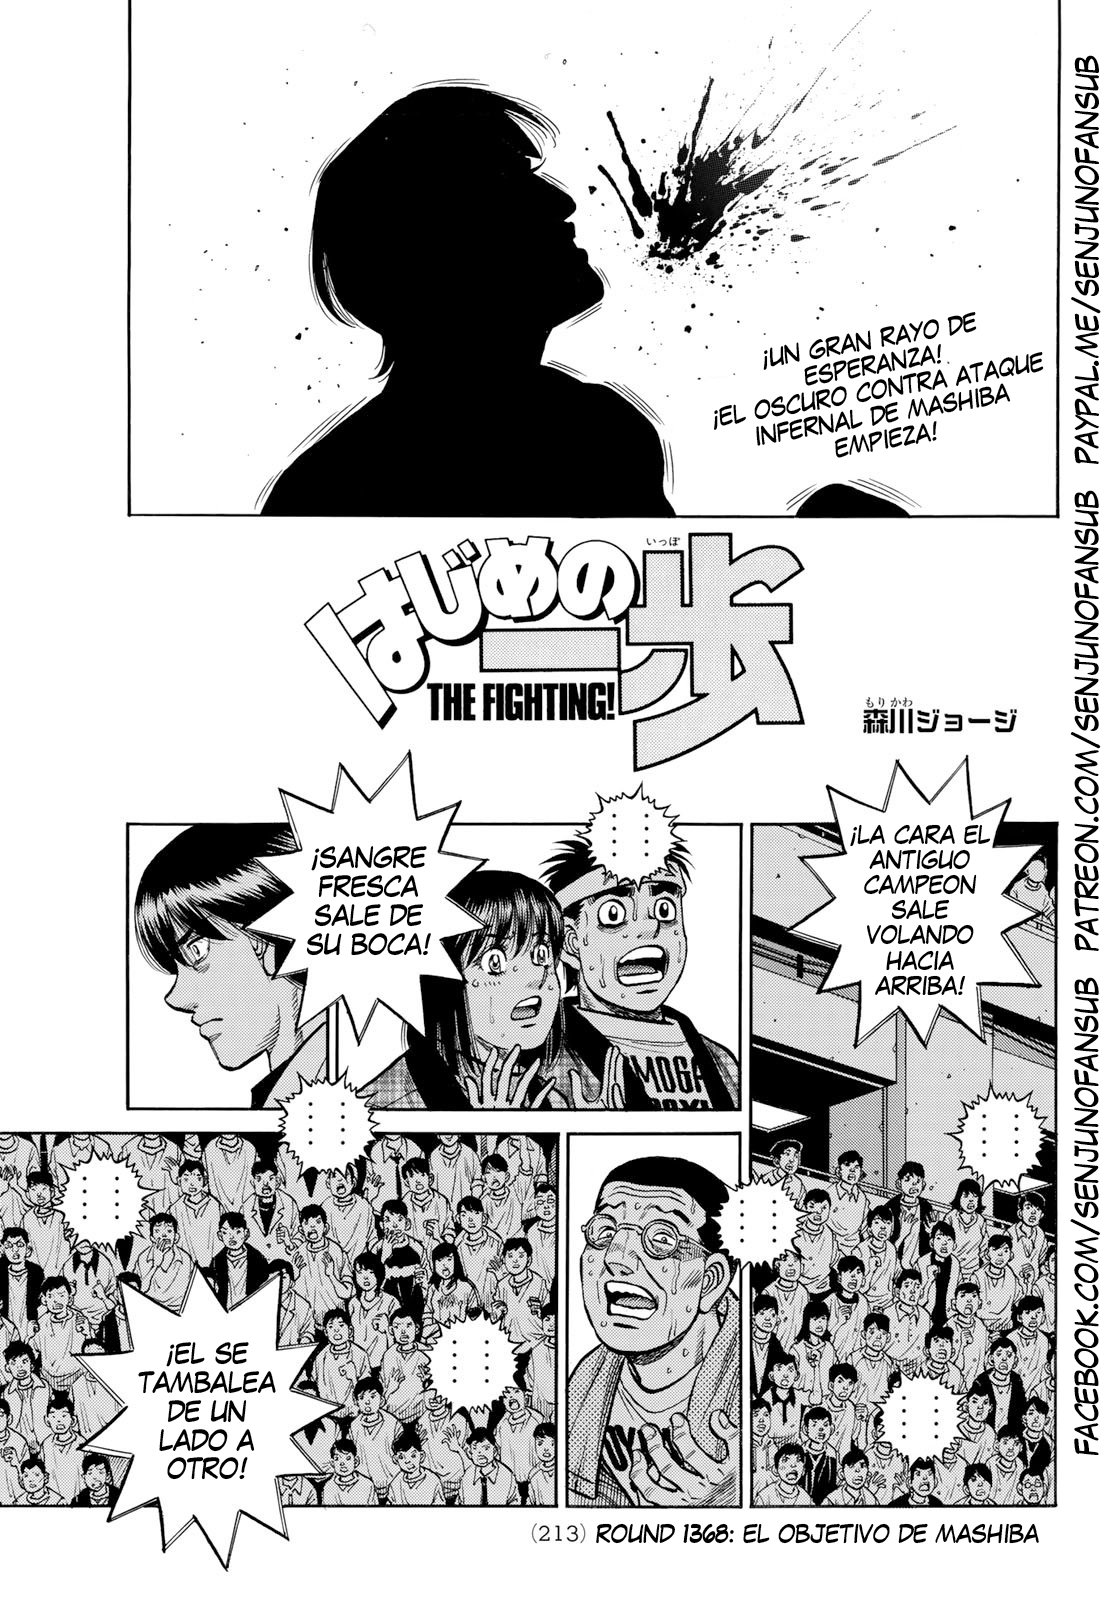 Manga Hajime no Ippo 1,189 Online - InManga